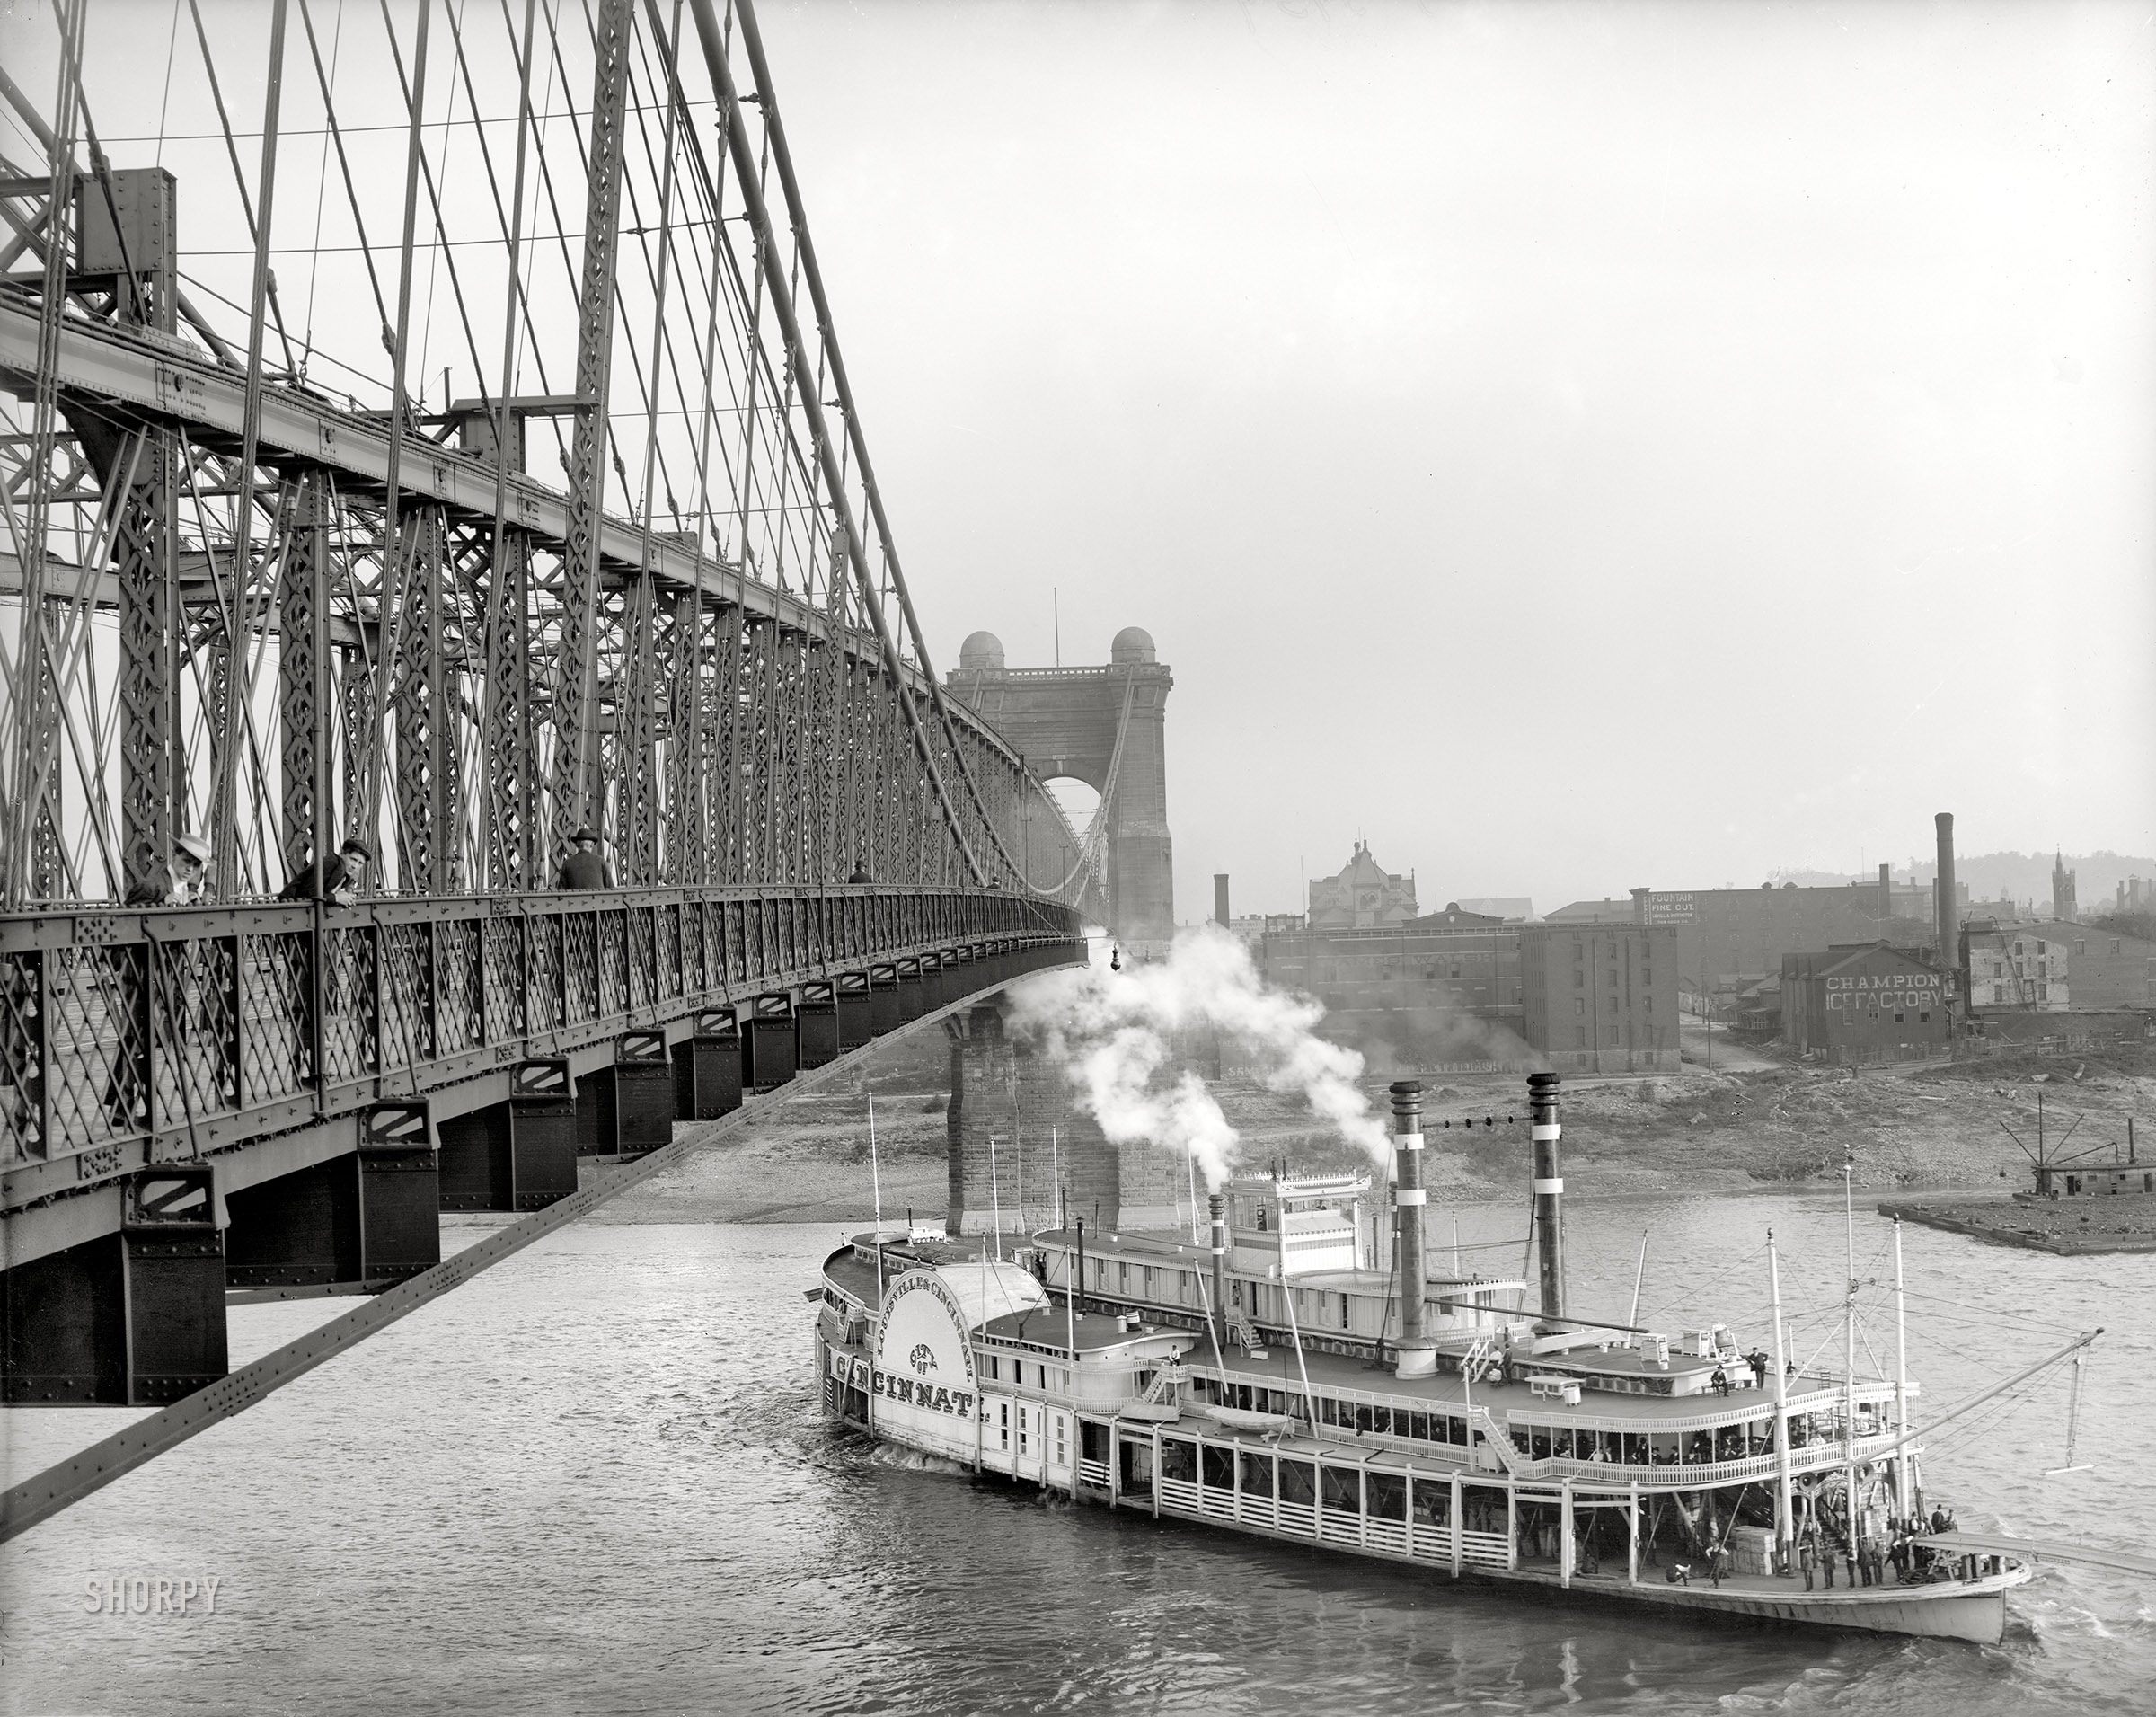 Cincinnati, Ohio, circa 1906. The sidewheeler Cincinnati passing under the Roebling Suspension Bridge. Detroit Publishing glass negative. View full size.